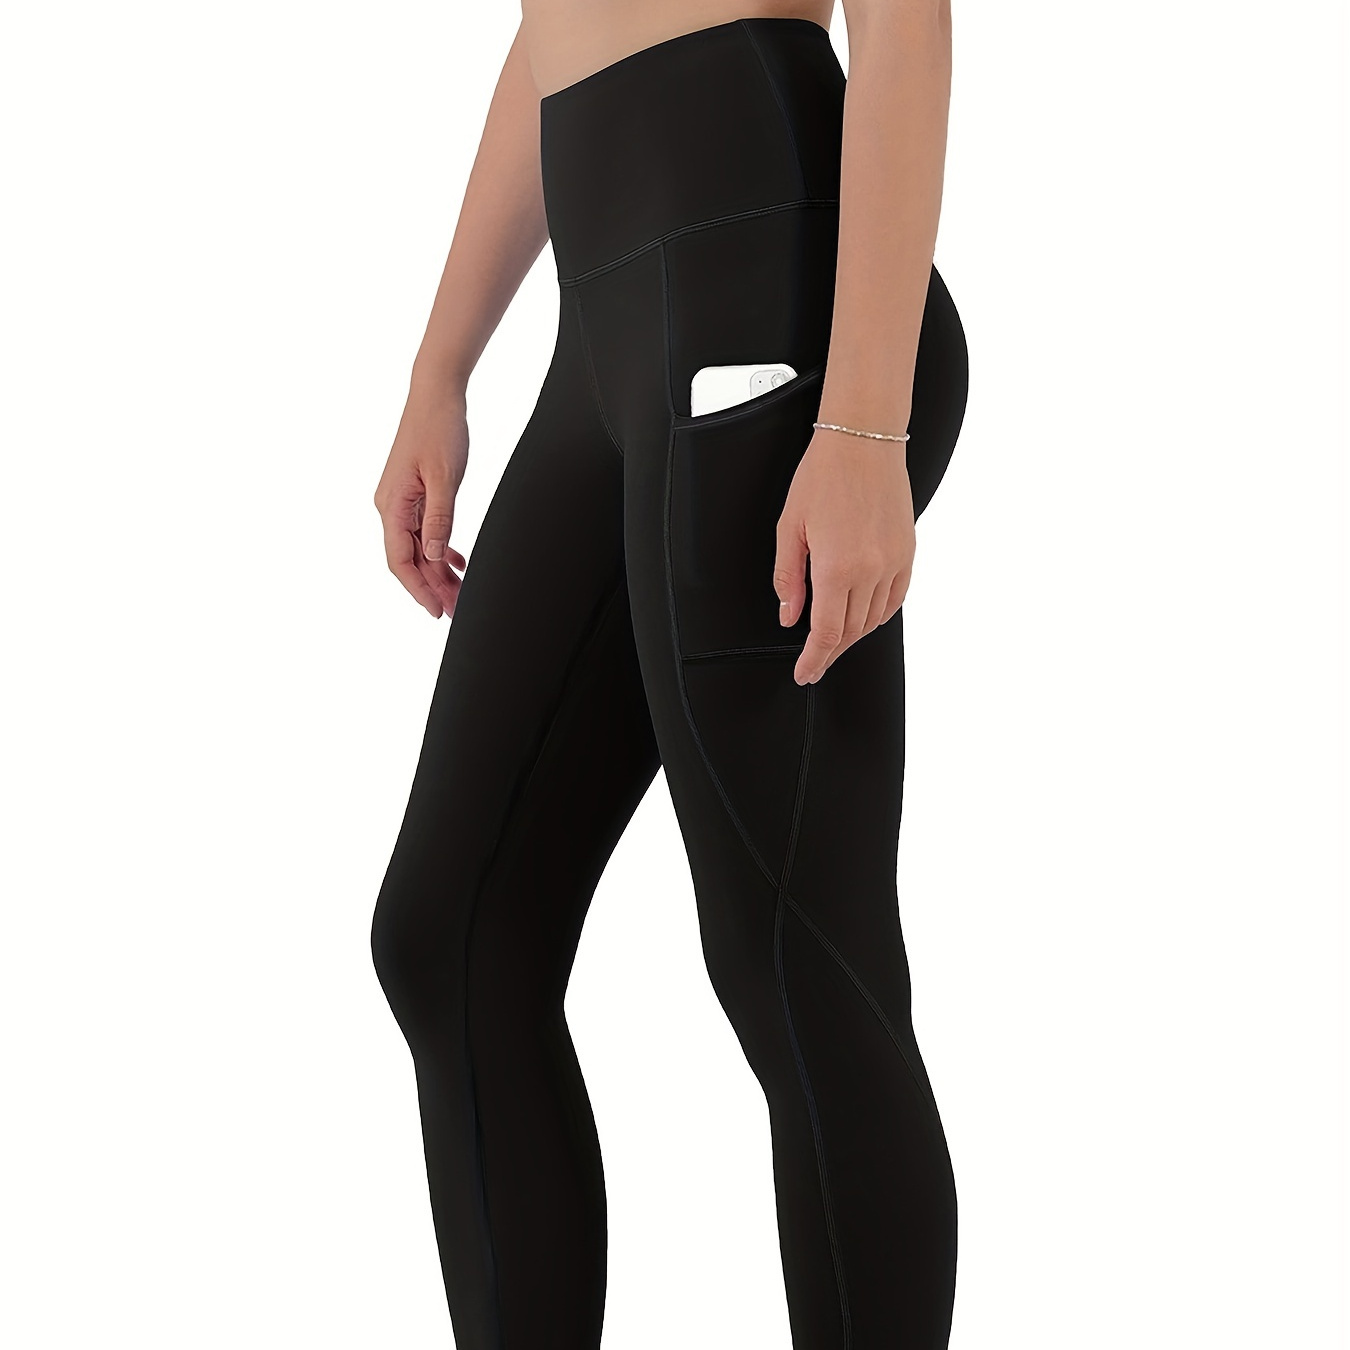 Leggings Depot - Yoga Pants with Side Pockets - $8.99~$15.99